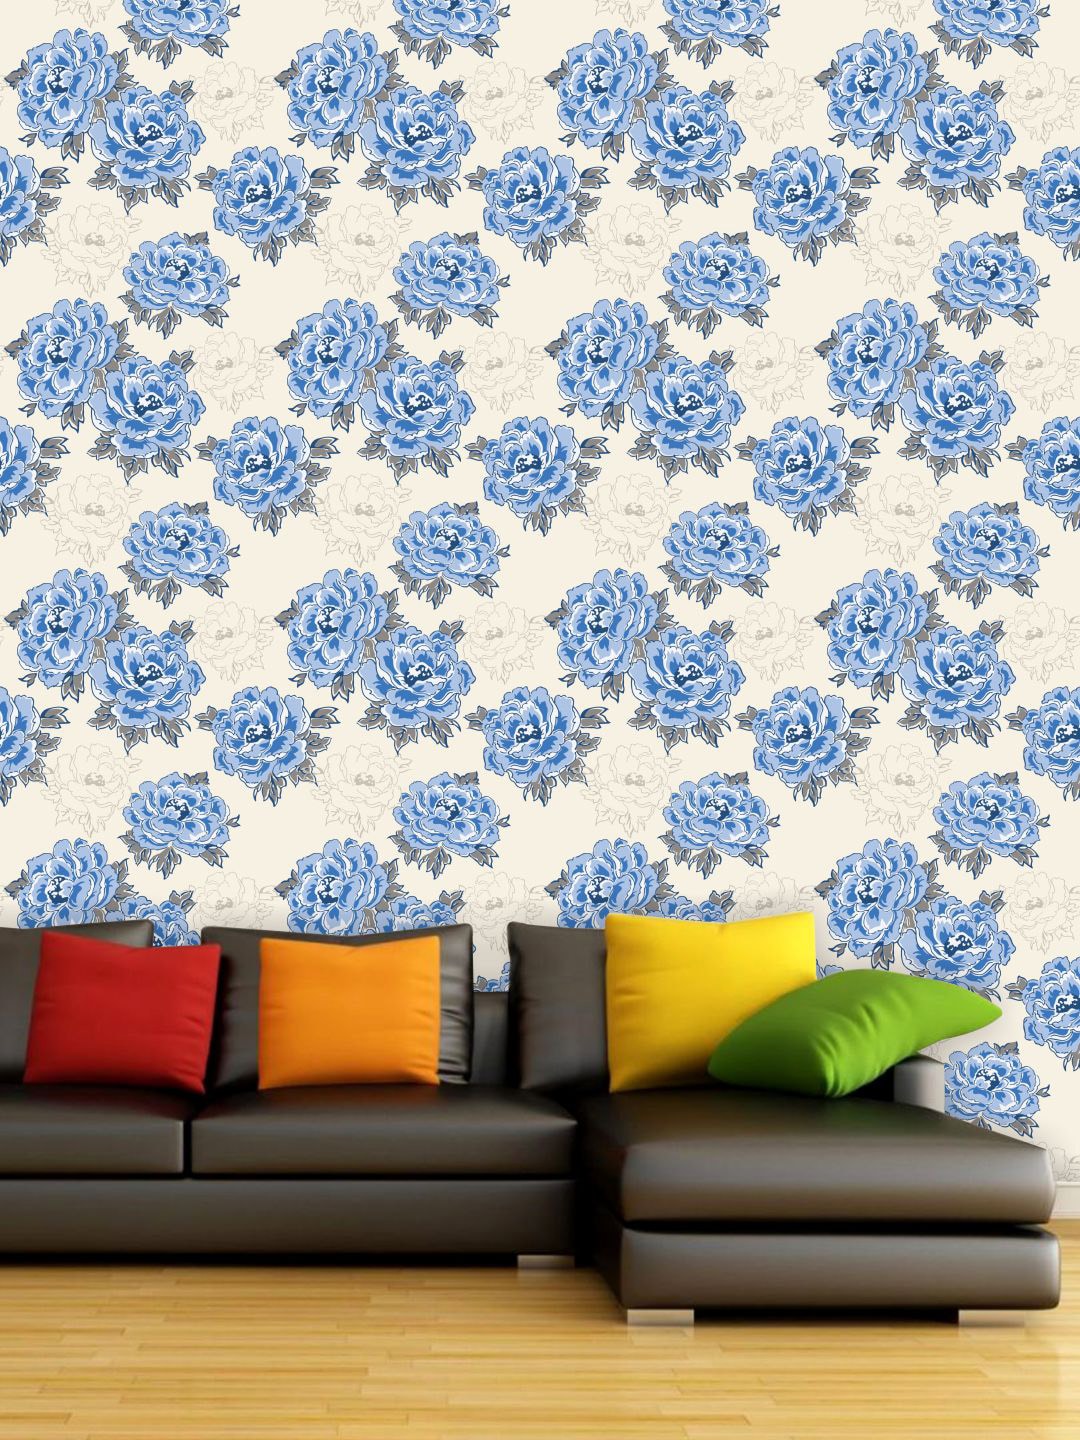 PAPER PLANE DESIGN Beige & Blue Floral Waterproof Vinyl Wallpaper Price in India